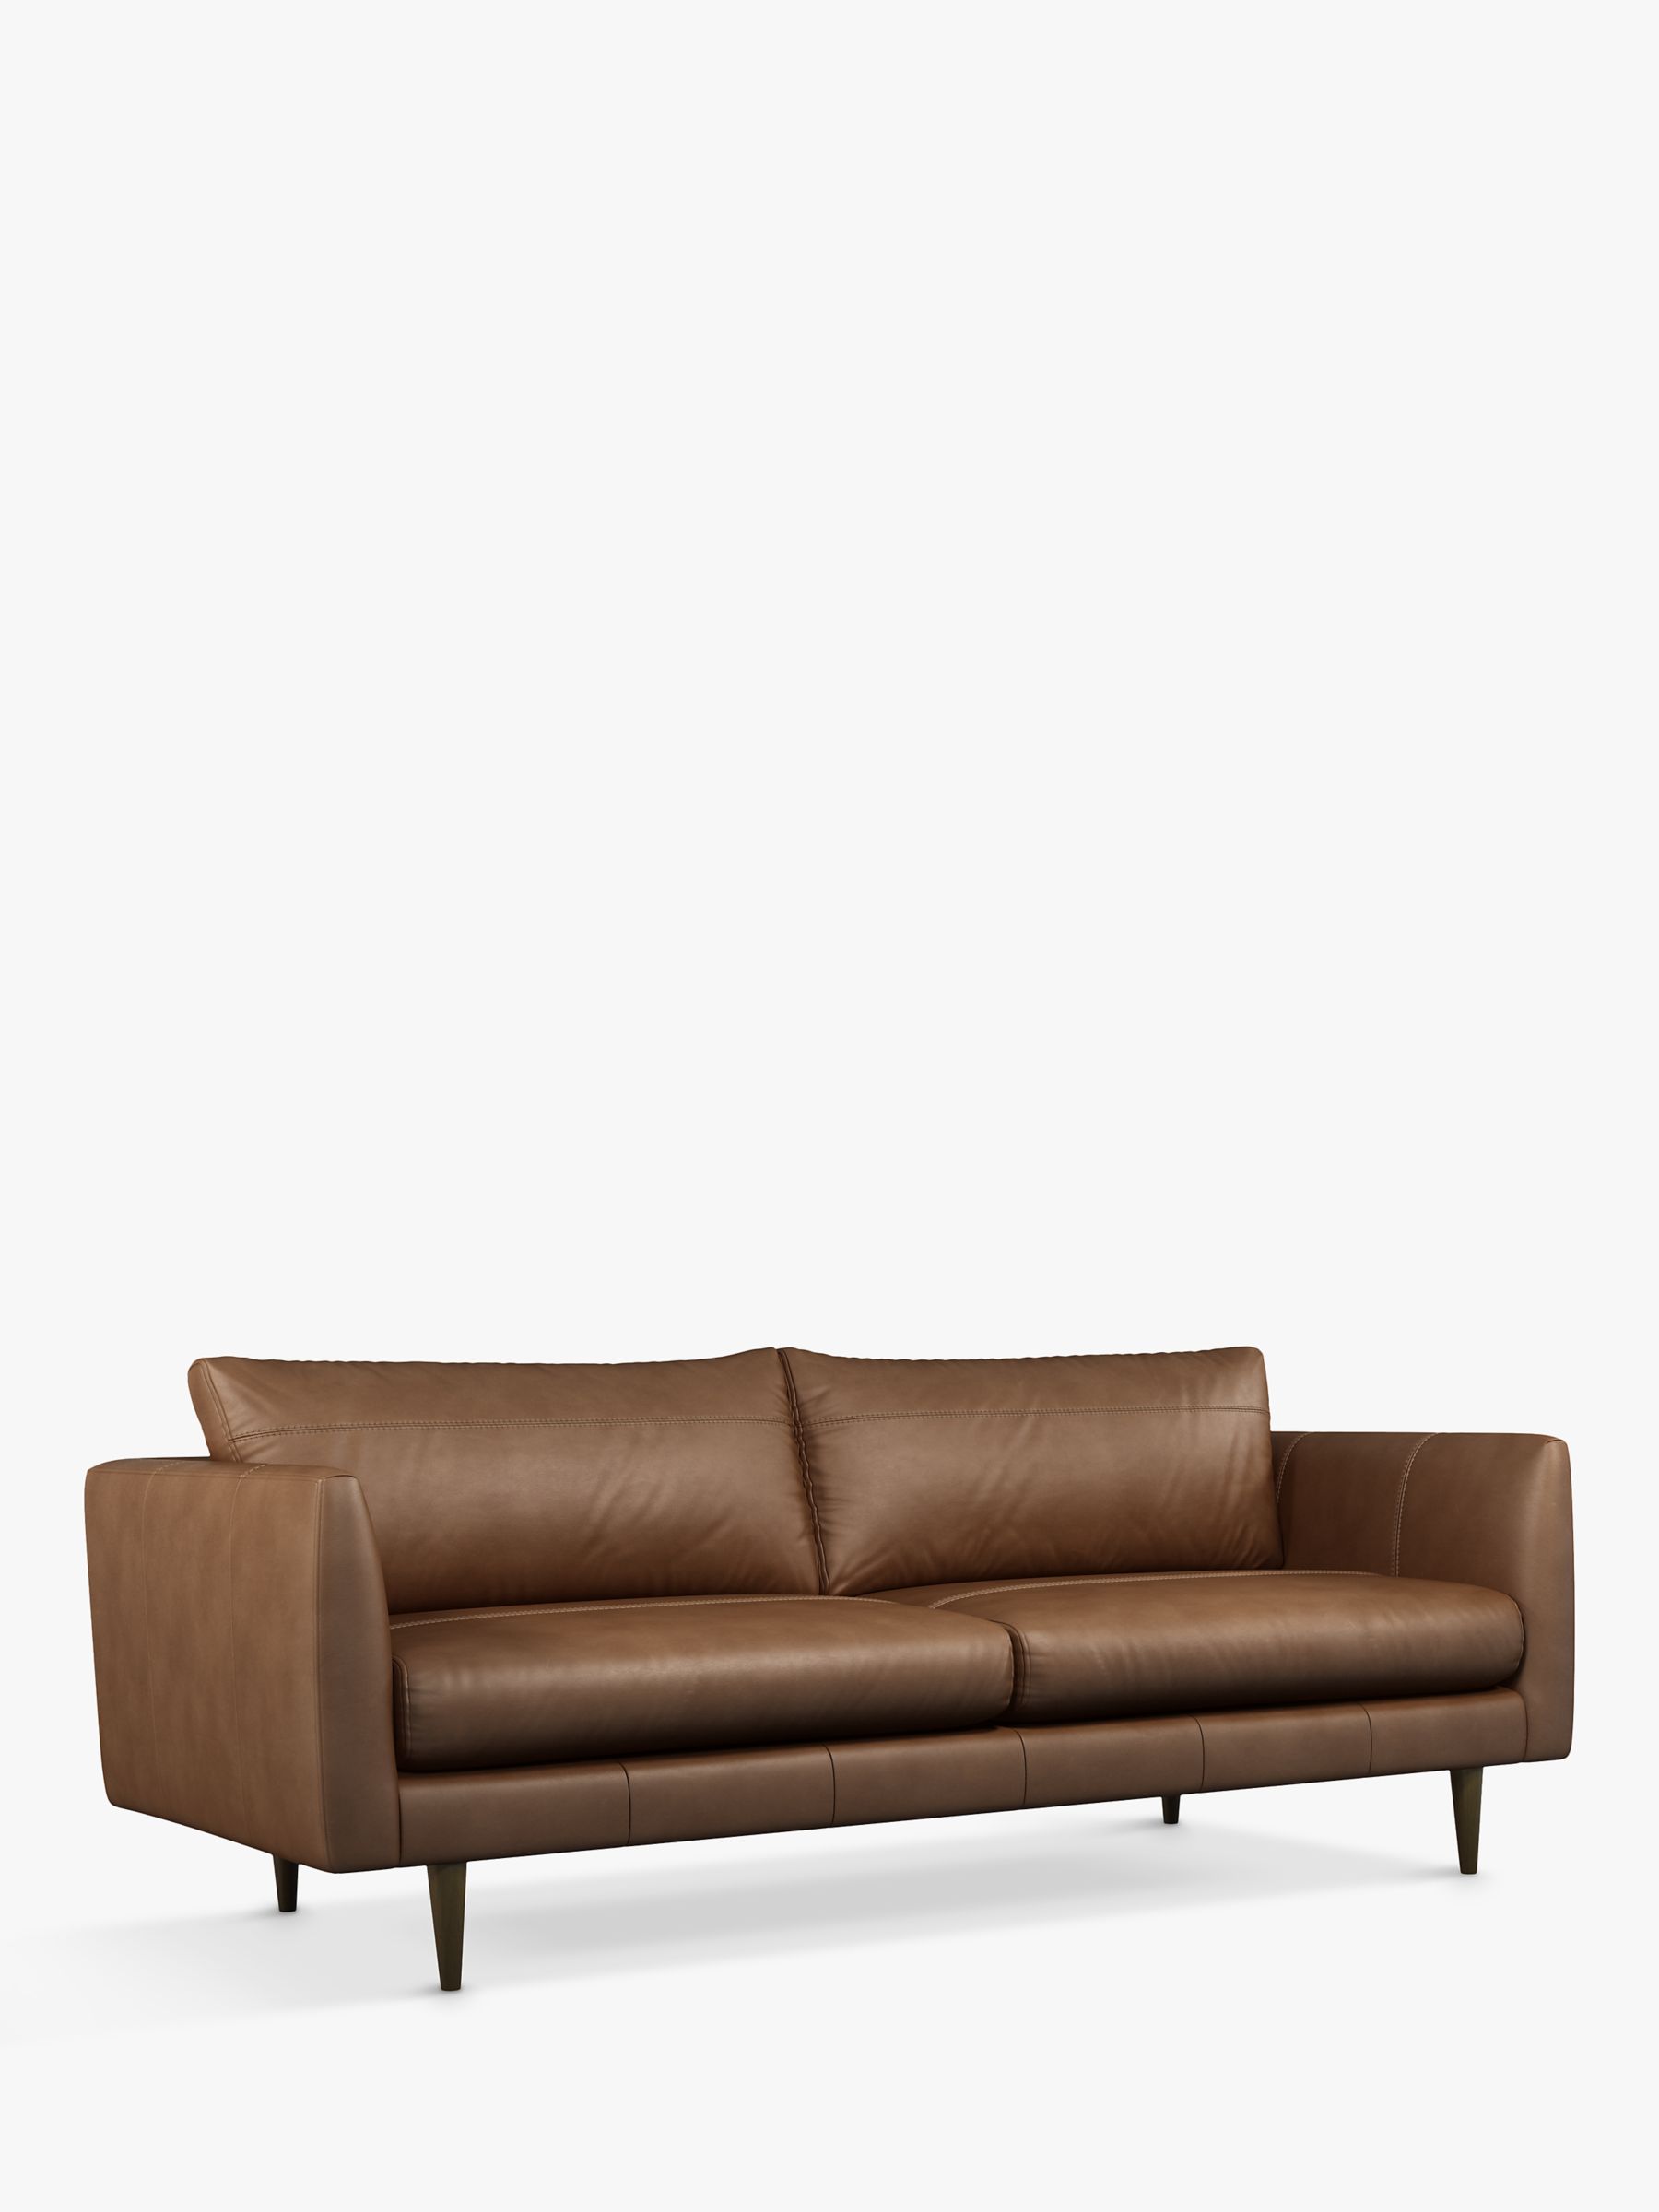 Latimer Range, John Lewis + Swoon Latimer Large 3 Seater Leather Sofa, Sellvagio Cognac